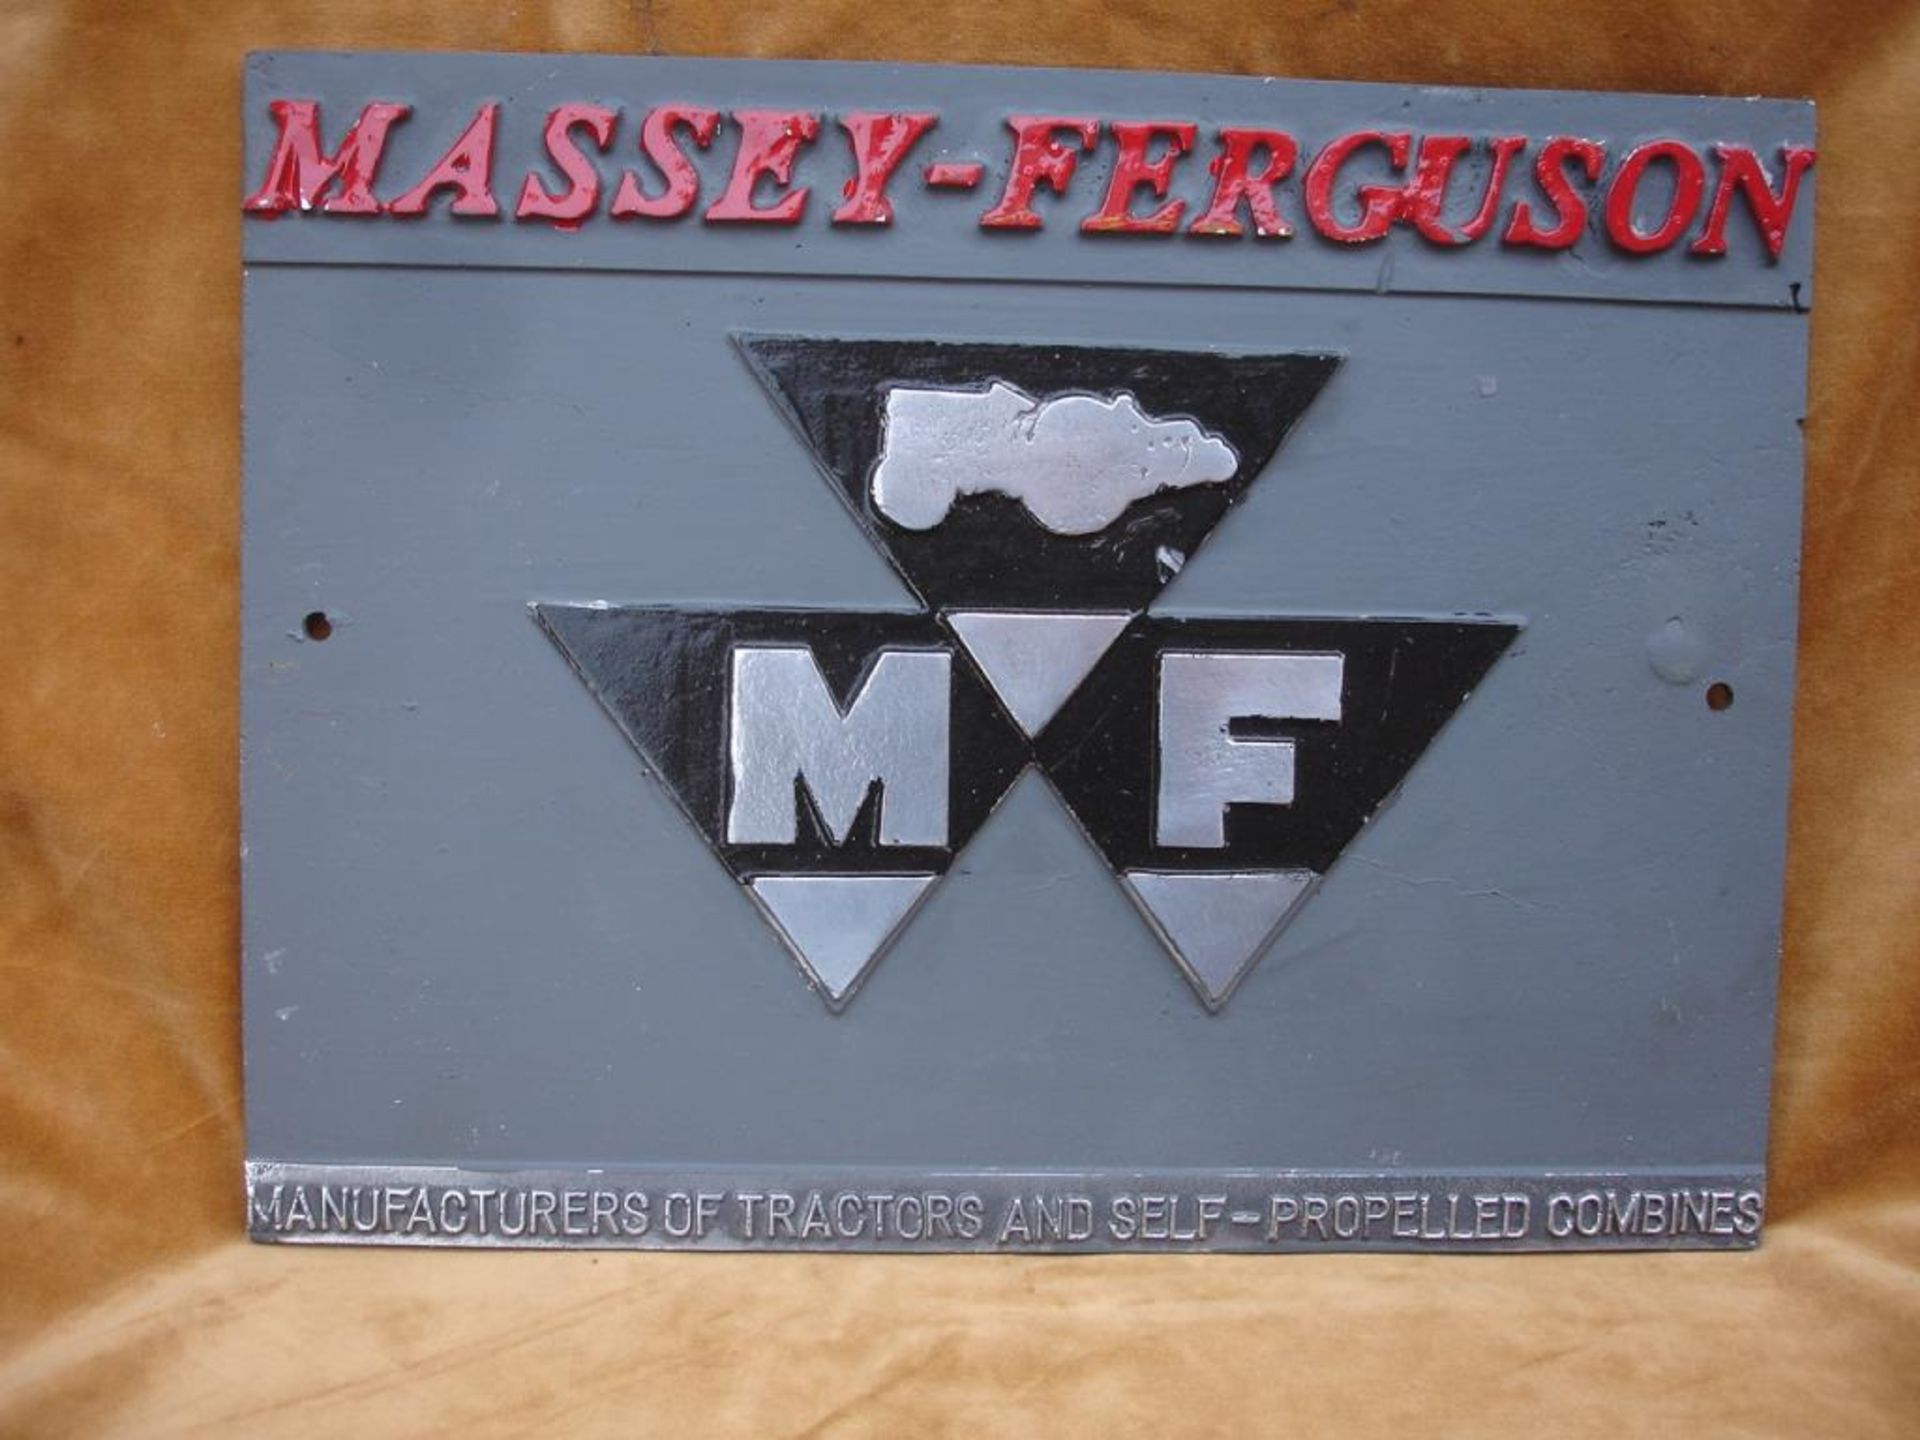 Massey Ferguson Agents wall plaque